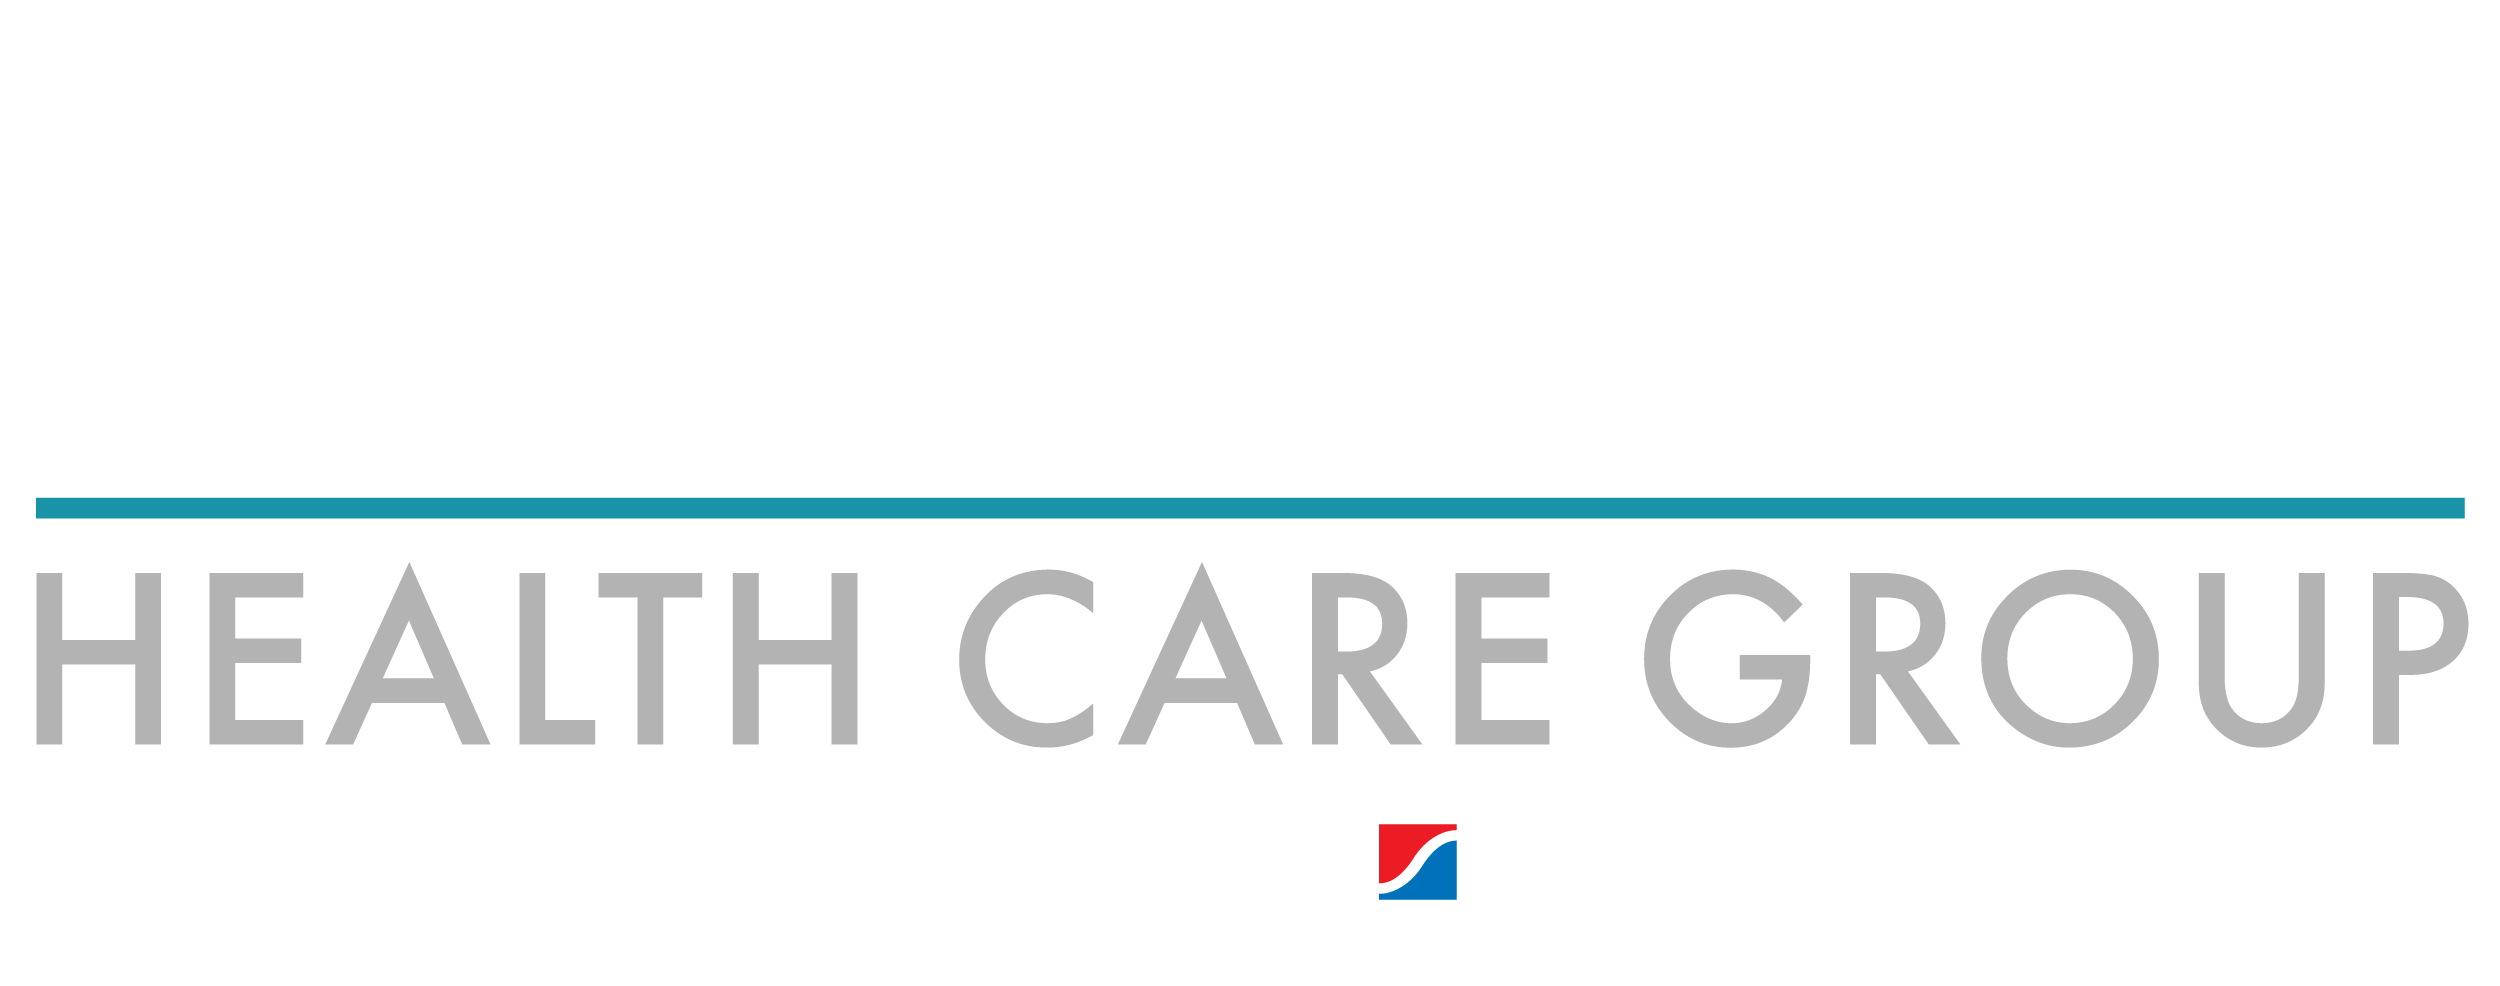 Regional Health Care Group